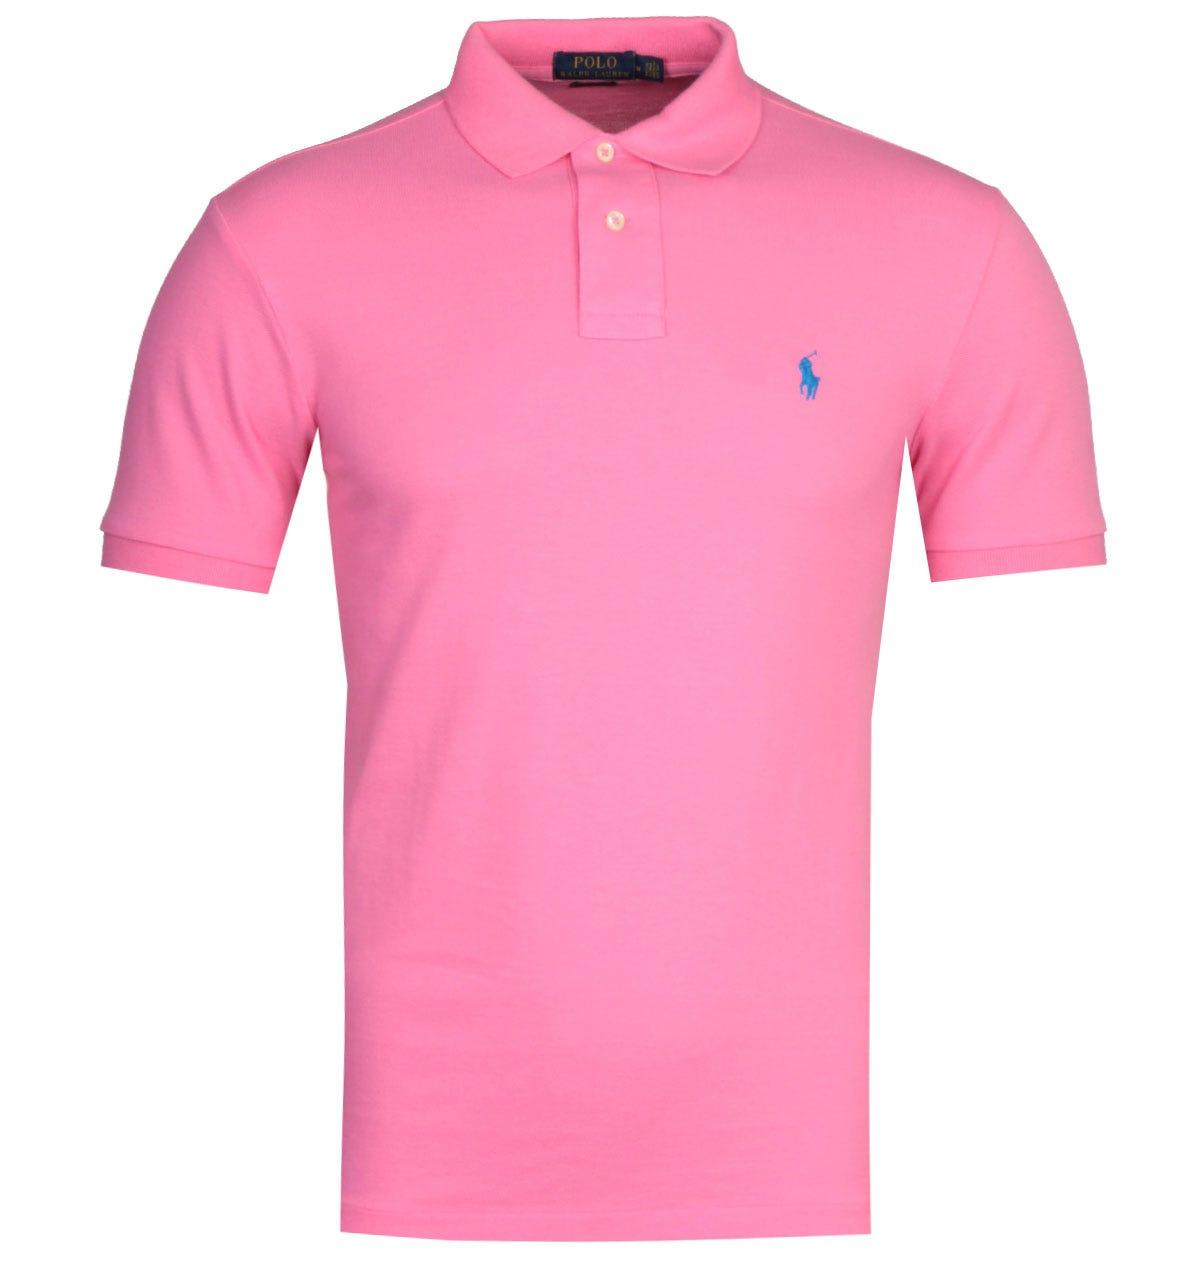 Polo Ralph Lauren Cotton Neon Pink Polo Shirt for Men - Lyst